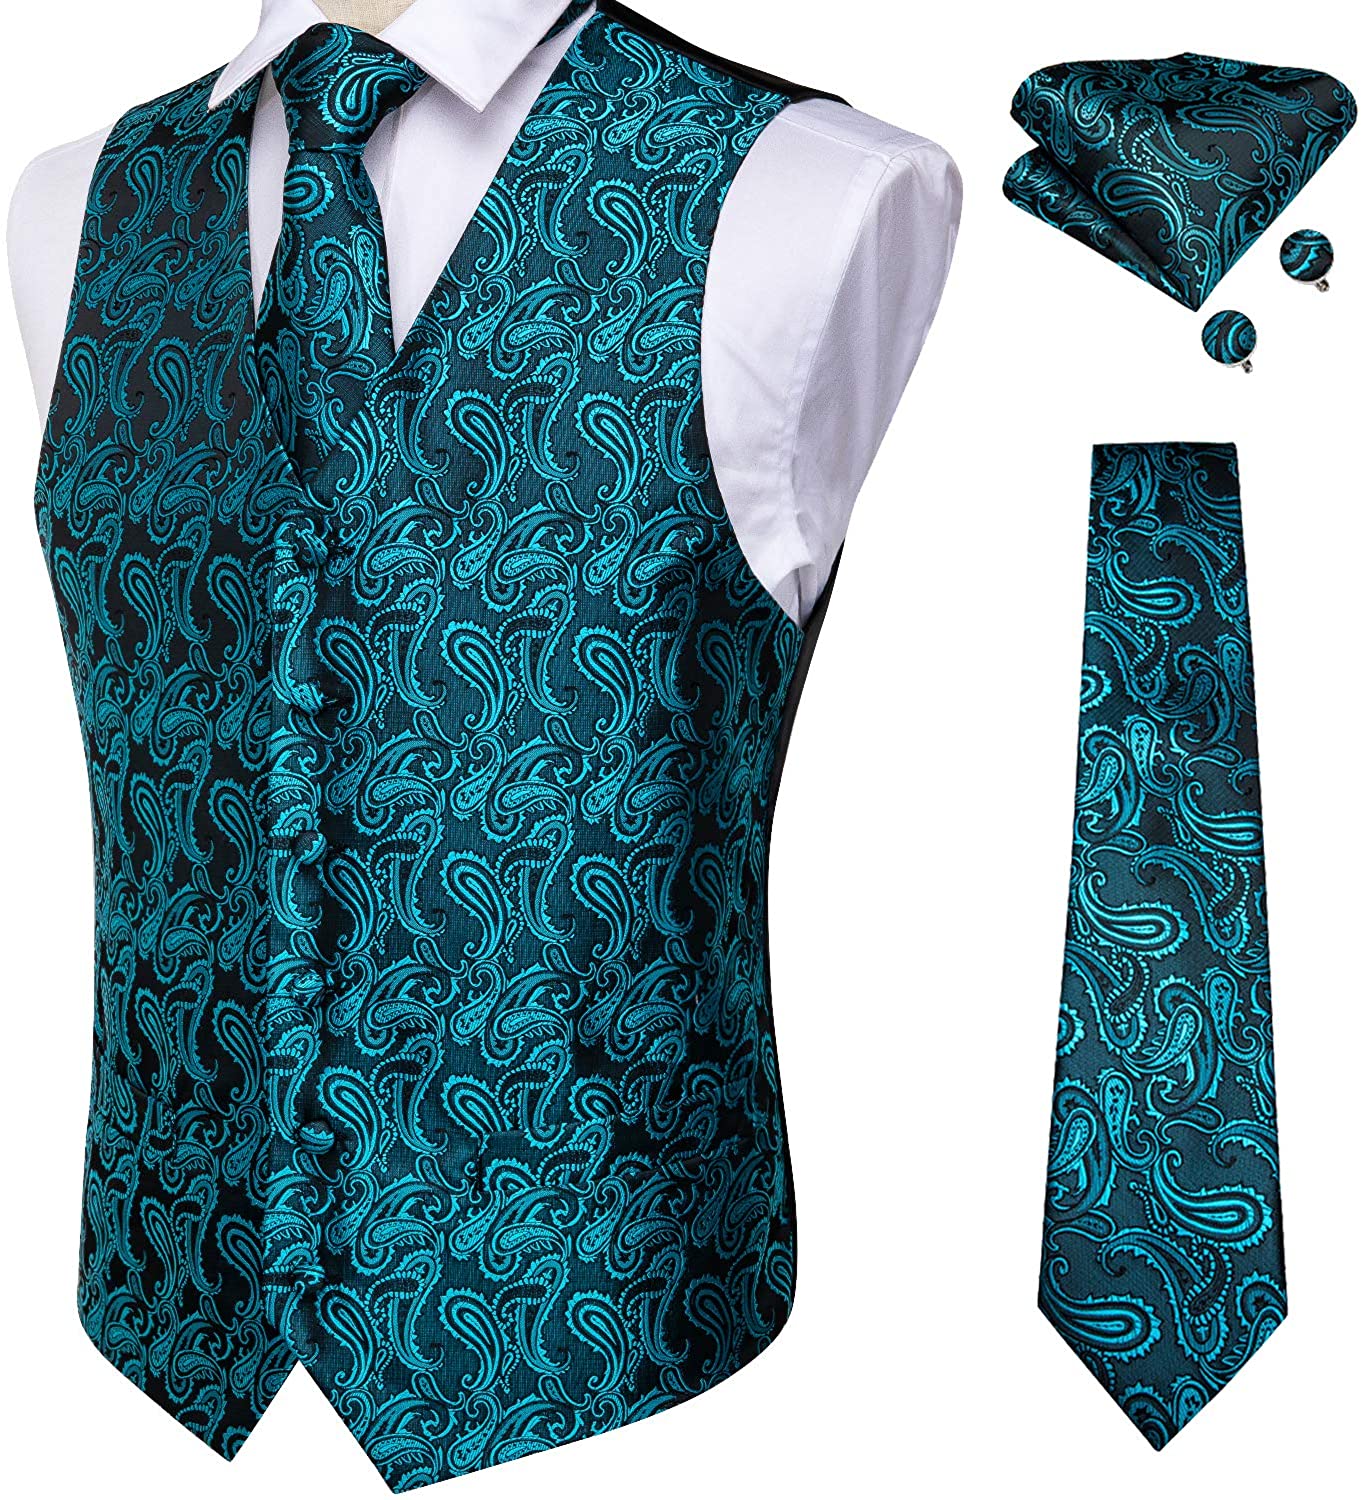 DiBanGu Men's Paisley Waistcoat and Necktie Pocket Square Cufflink Vest Suit Set for Tuxedo